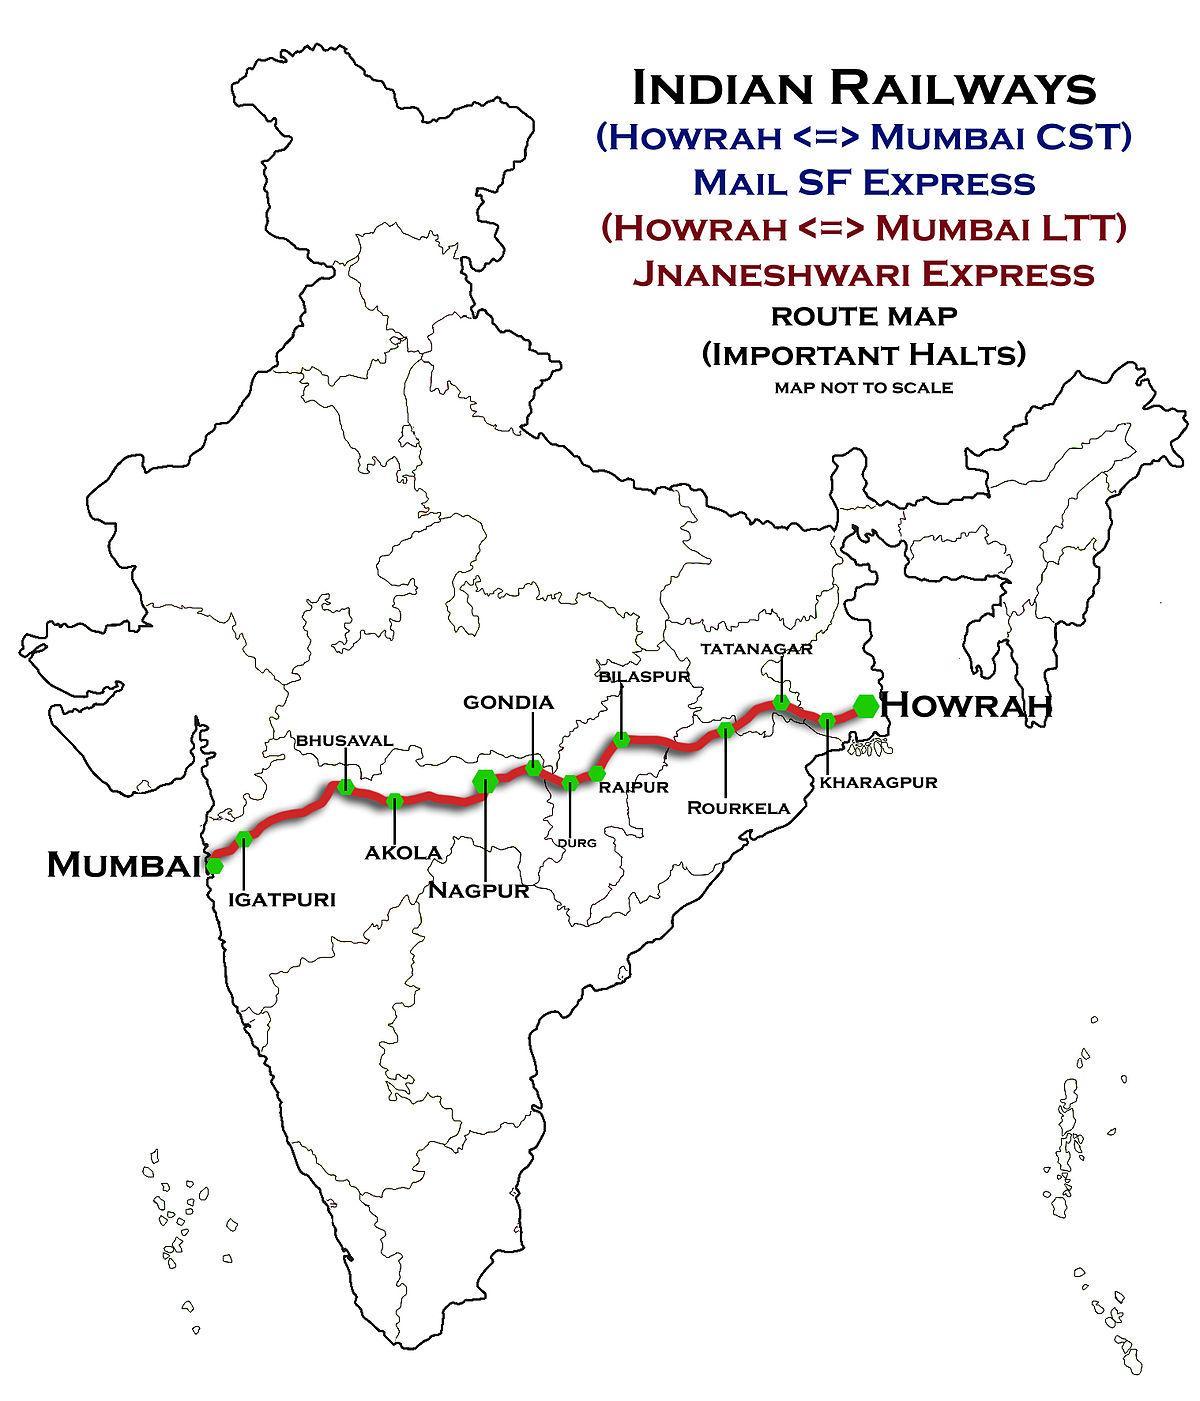 nagpur Mumbai express highway karta